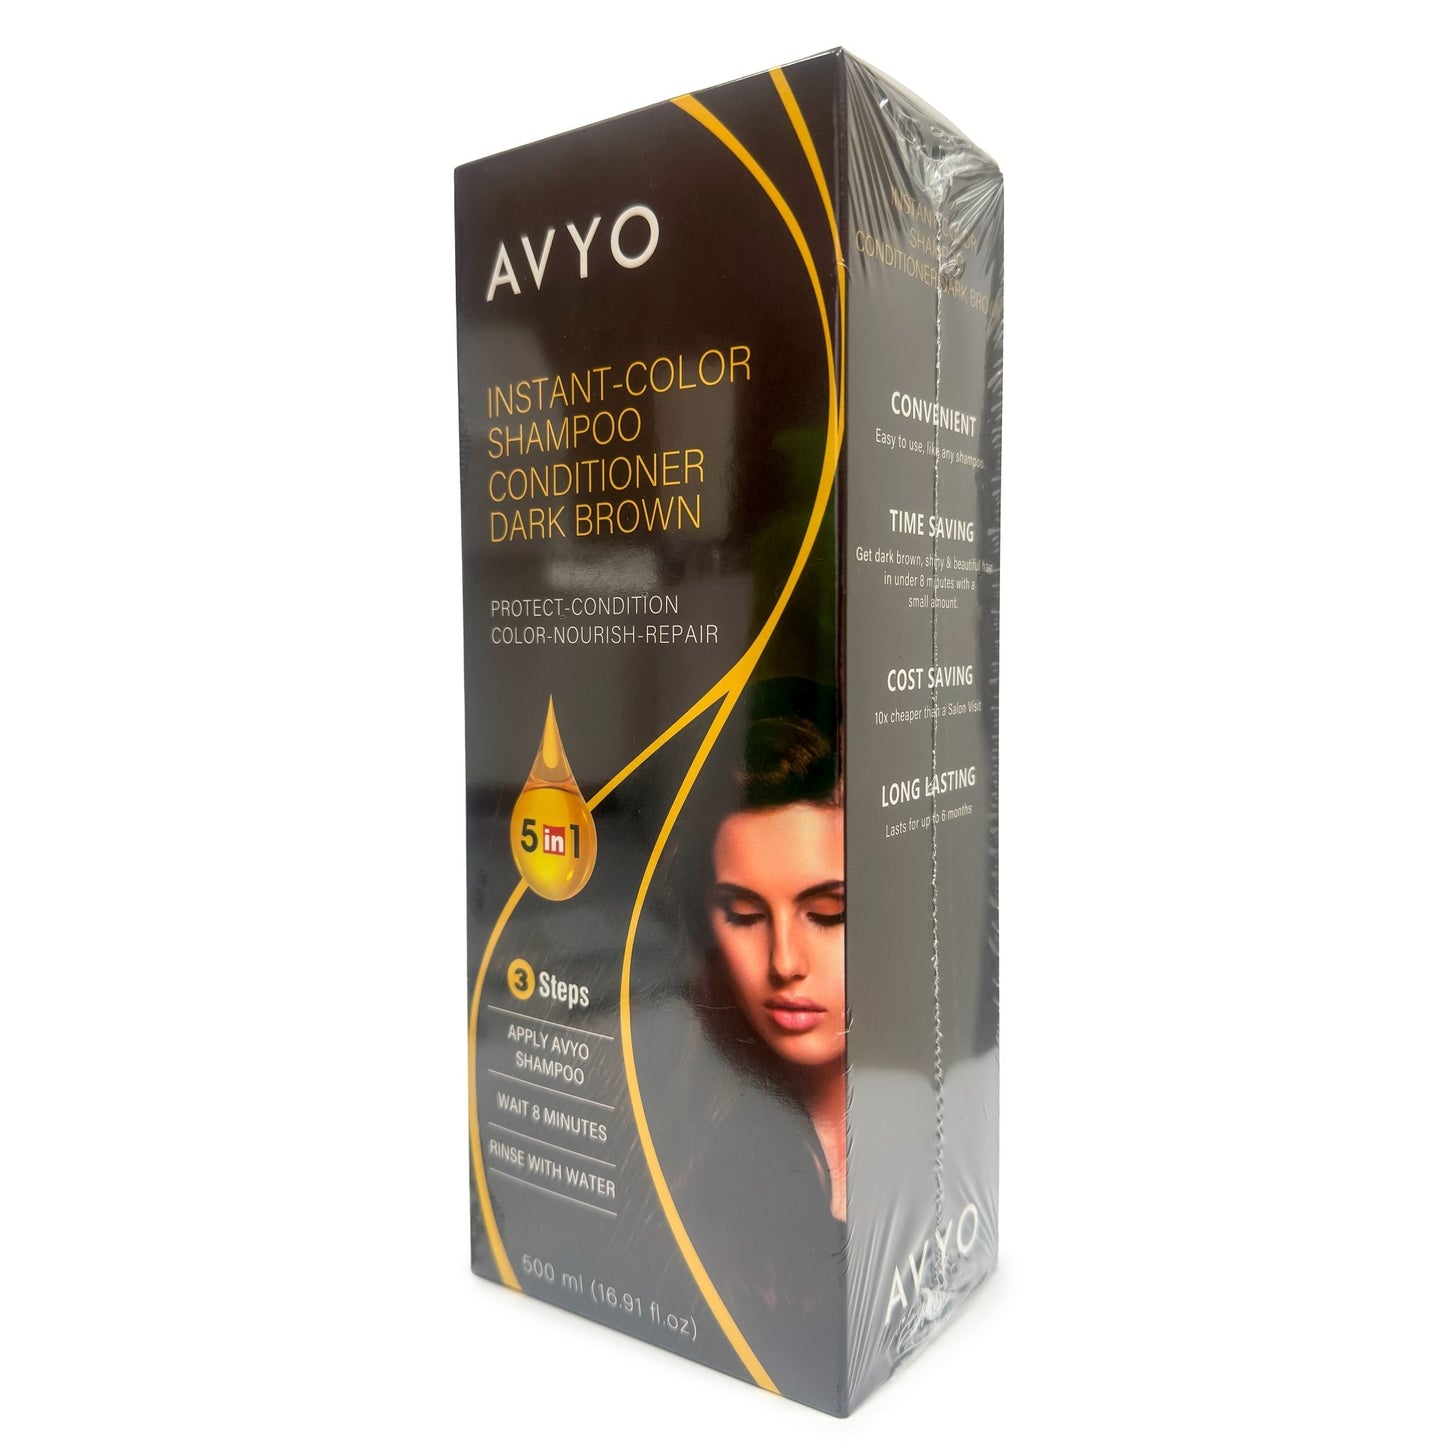 Dark Brown | Instant-Color Shampoo Conditioner | 5 in 1 | 500 mL - 16.91 fl.oz. | AVYO - SH Salons